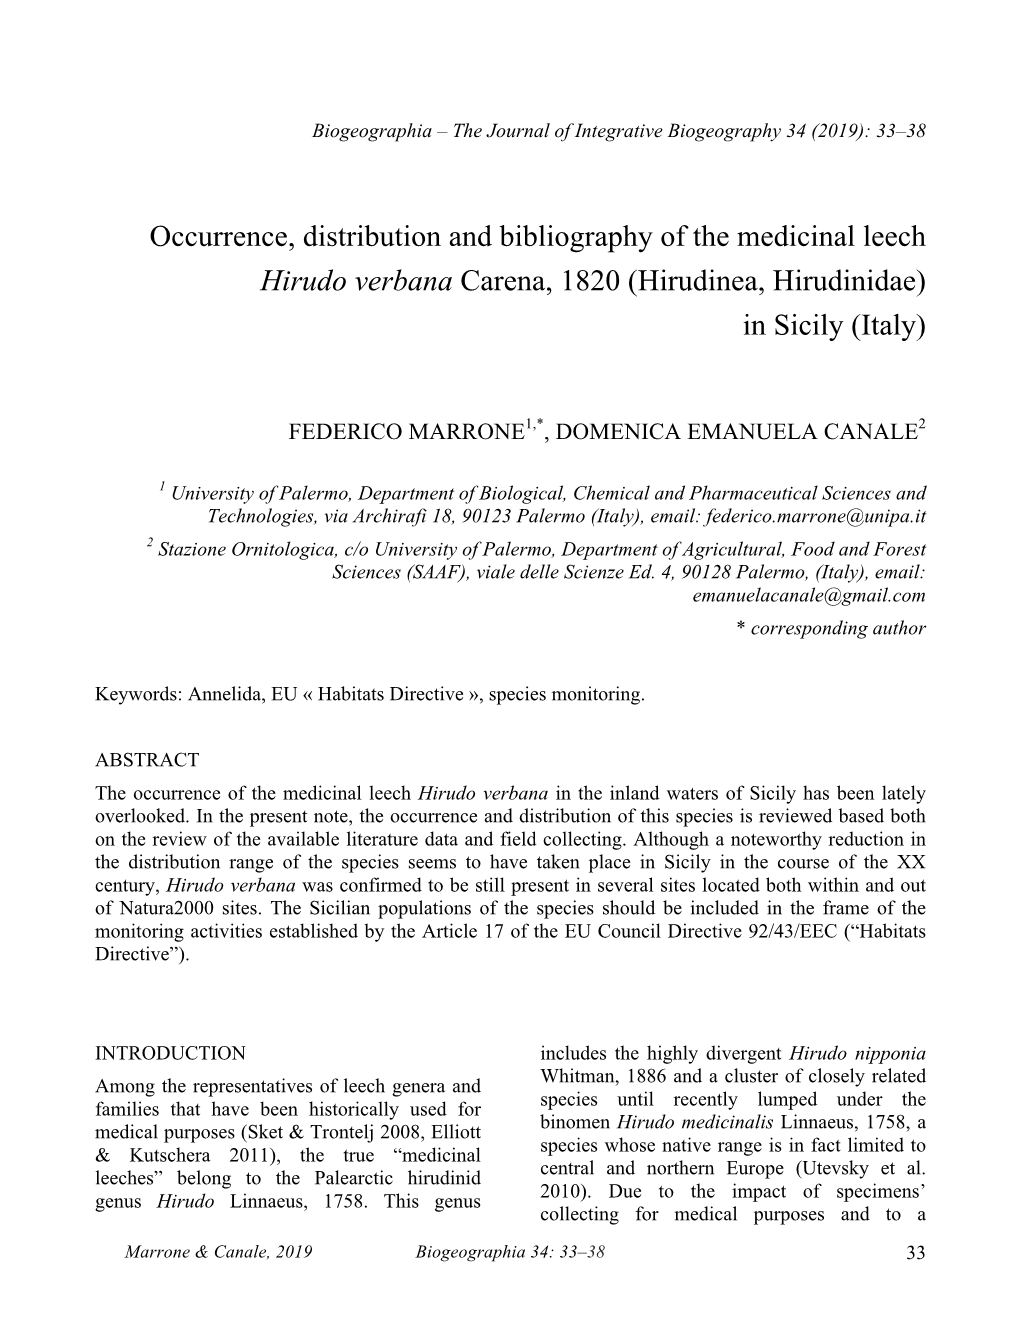 Occurrence, Distribution and Bibliography of the Medicinal Leech Hirudo Verbana Carena, 1820 (Hirudinea, Hirudinidae) in Sicily (Italy)